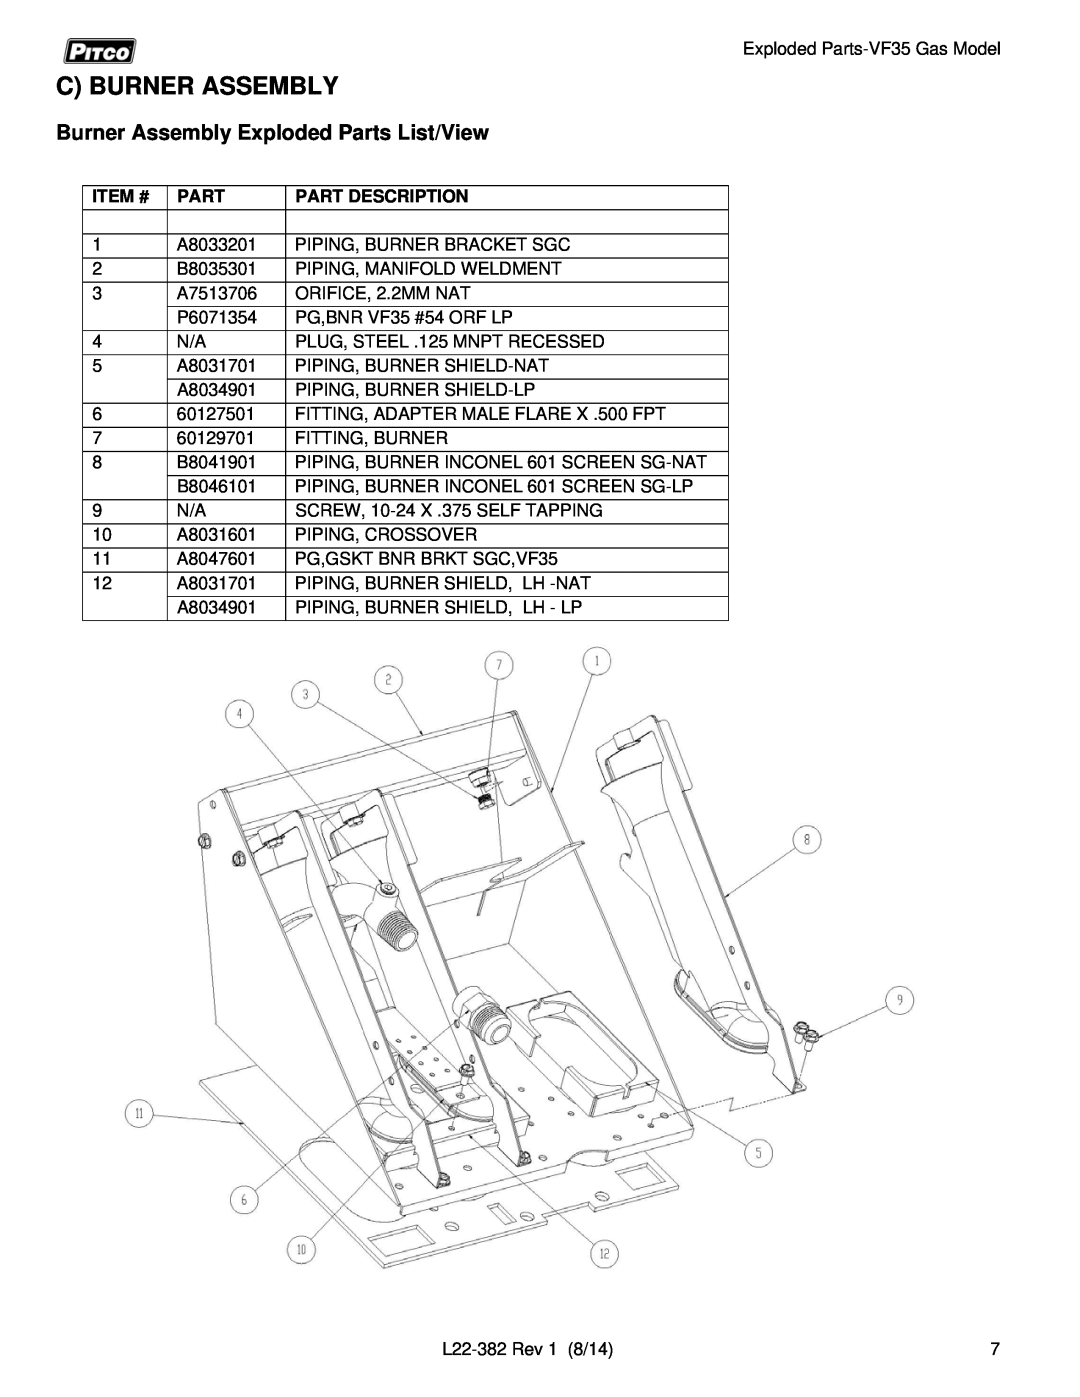 Pitco Frialator VF35 manual C Burner Assembly, Burner Assembly Exploded Parts List/View, Item #, Part Description 